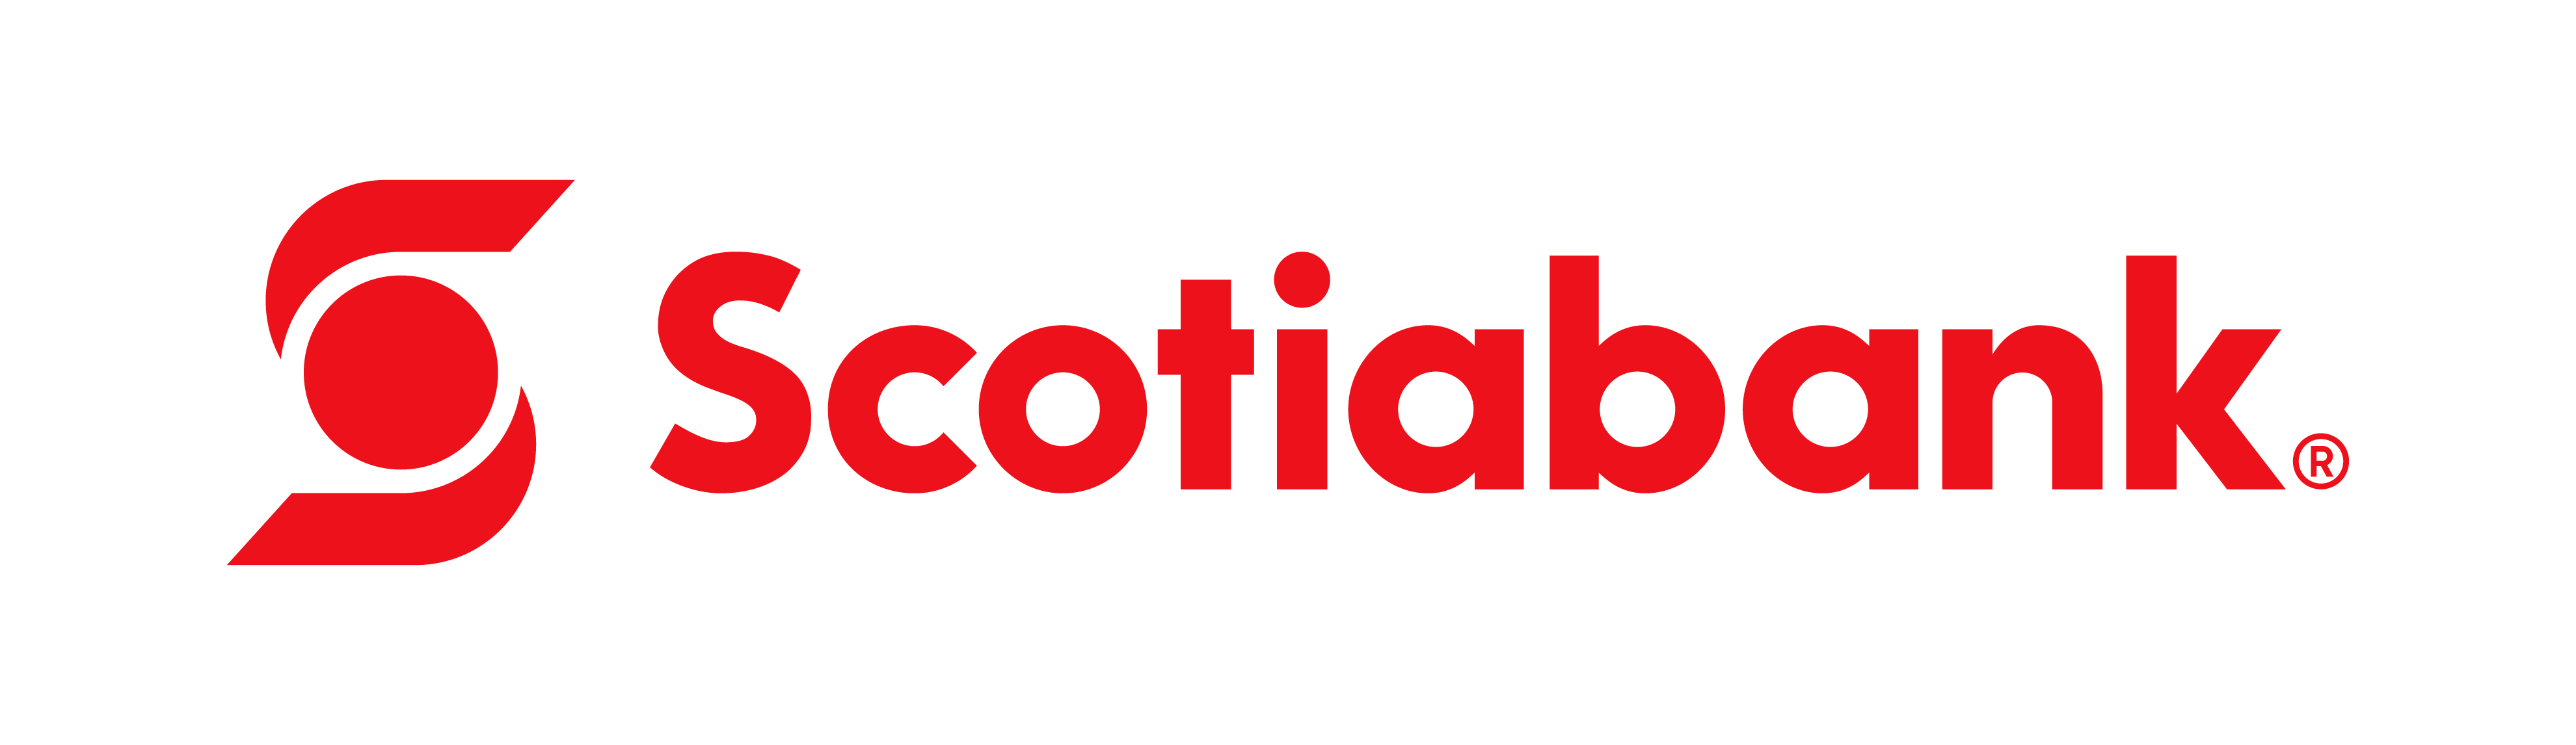 https://ppforum.ca/wp-content/uploads/2021/04/Scotiabank_logo_corporate_2021.png